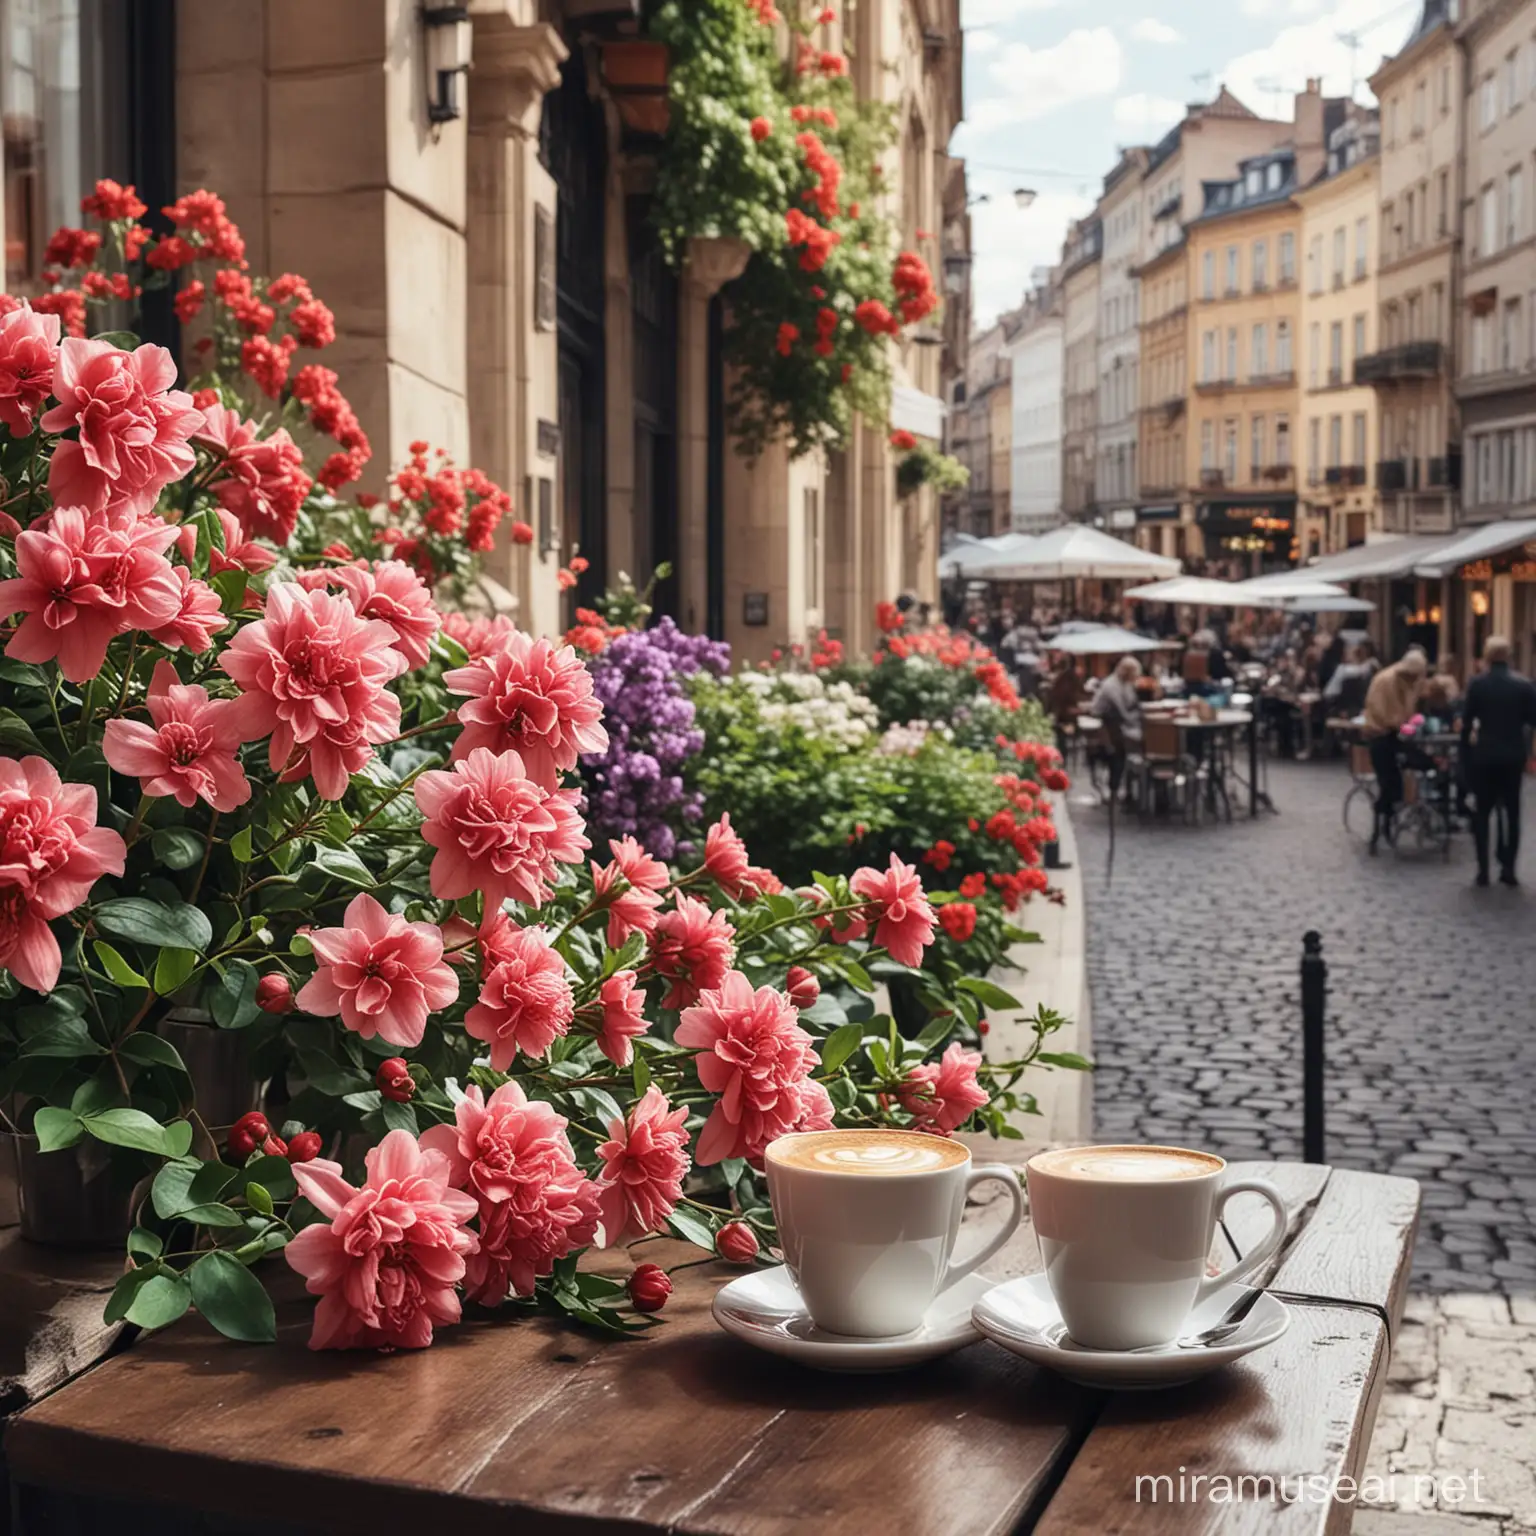 beautiful city scene, coffee break and flowers